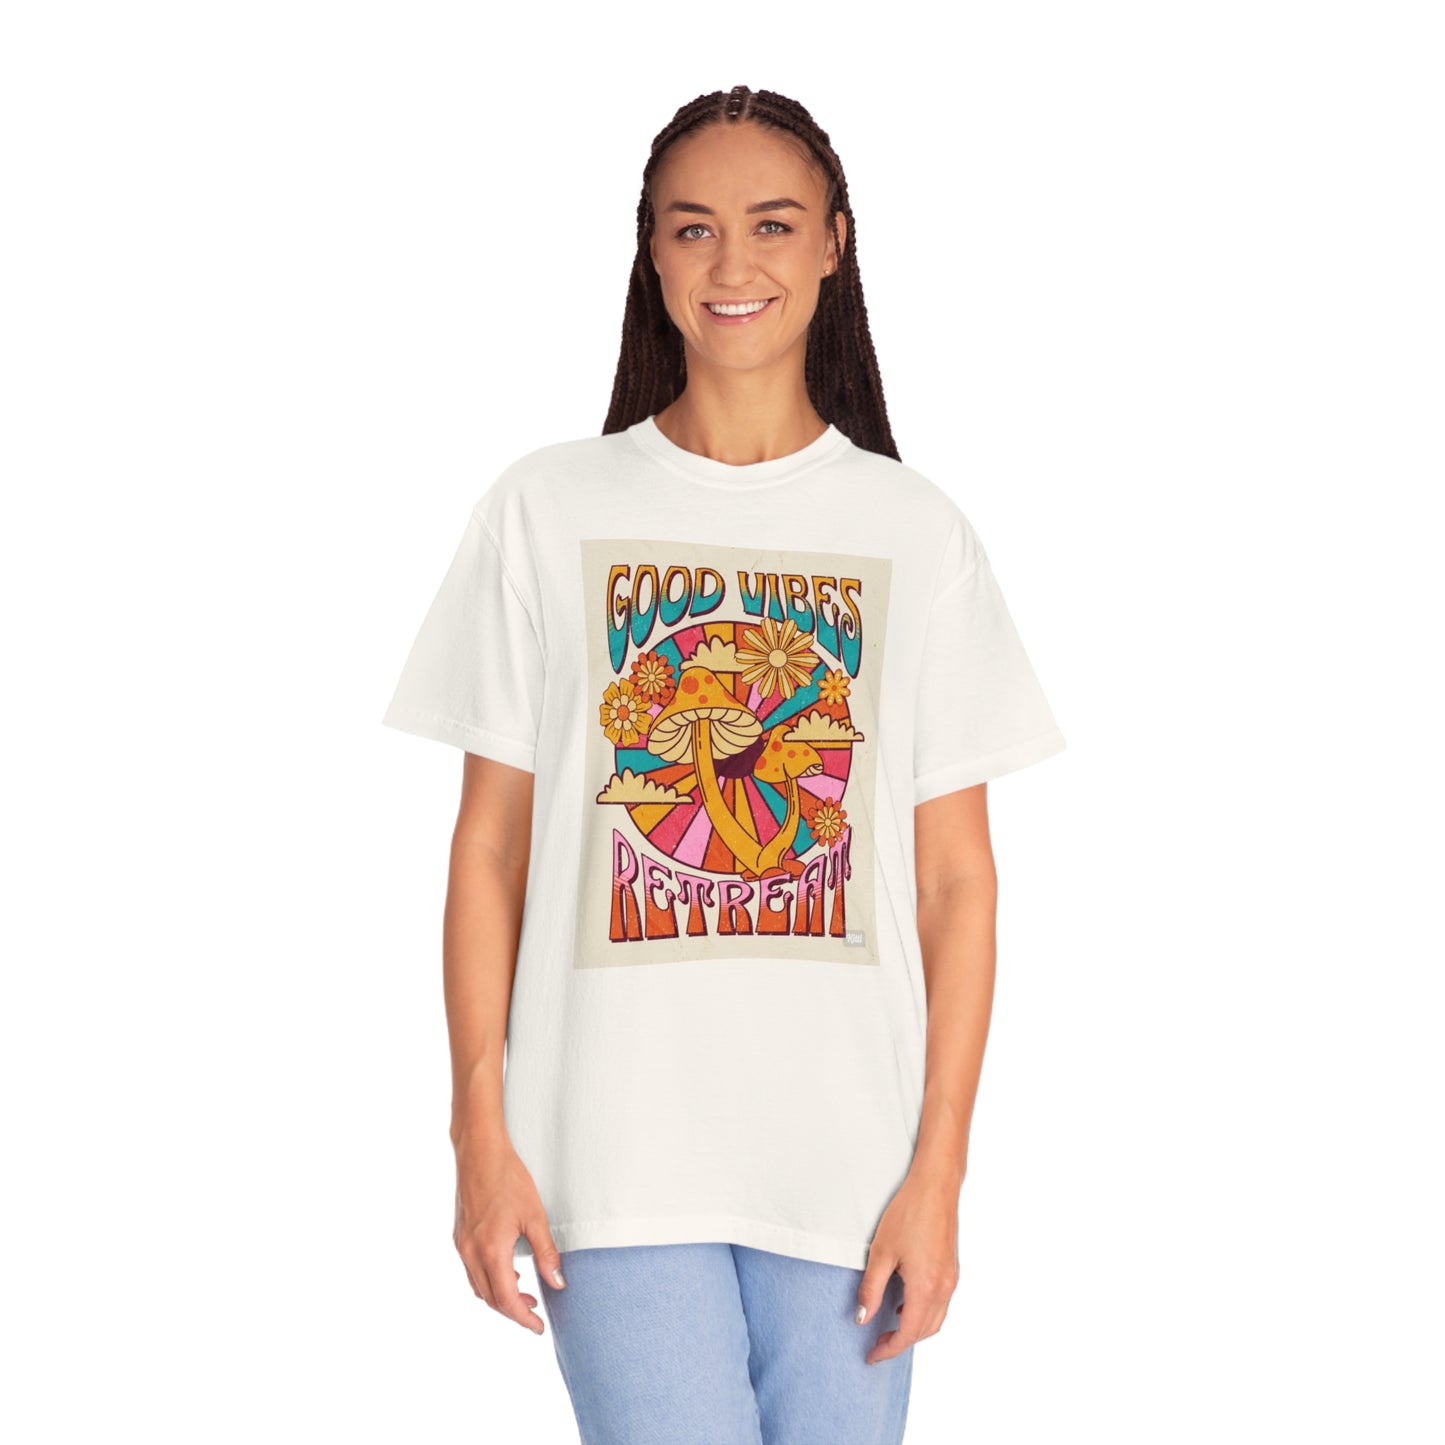 Unisex Garment-Dyed T-shirt - Spy-shop.com